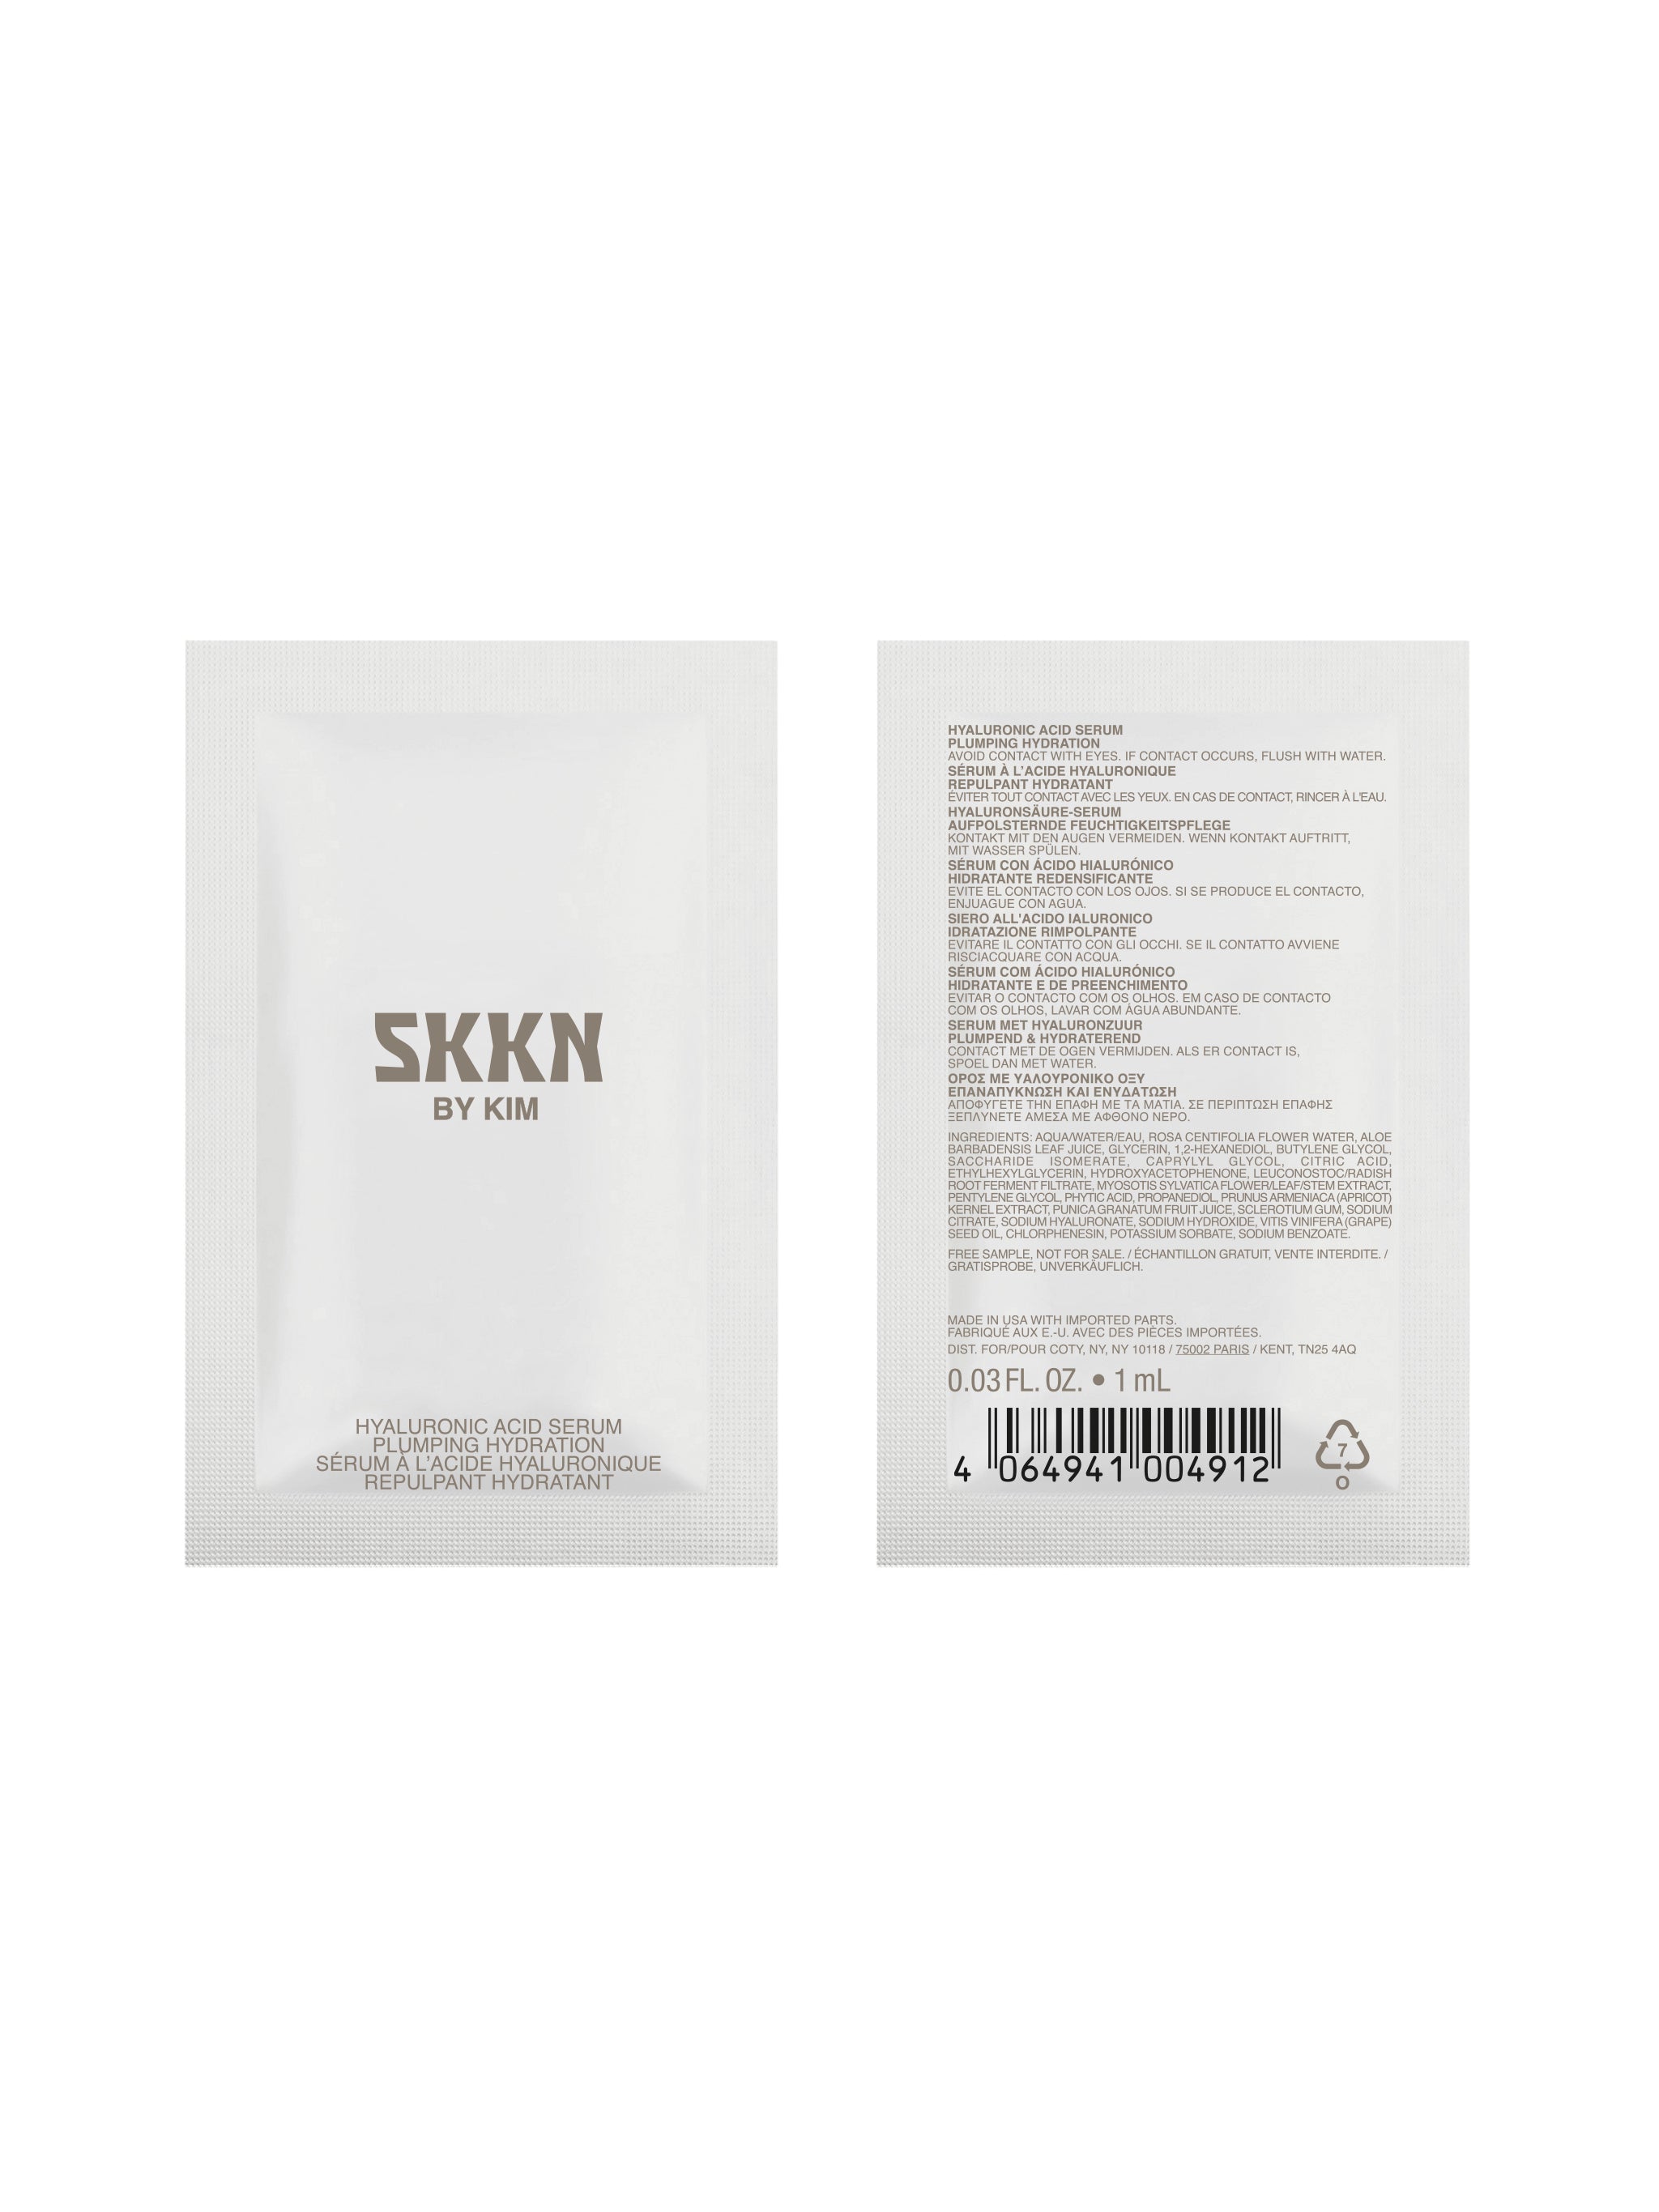 SKKN BY KIM Hyaluronic Acid Serum Sample